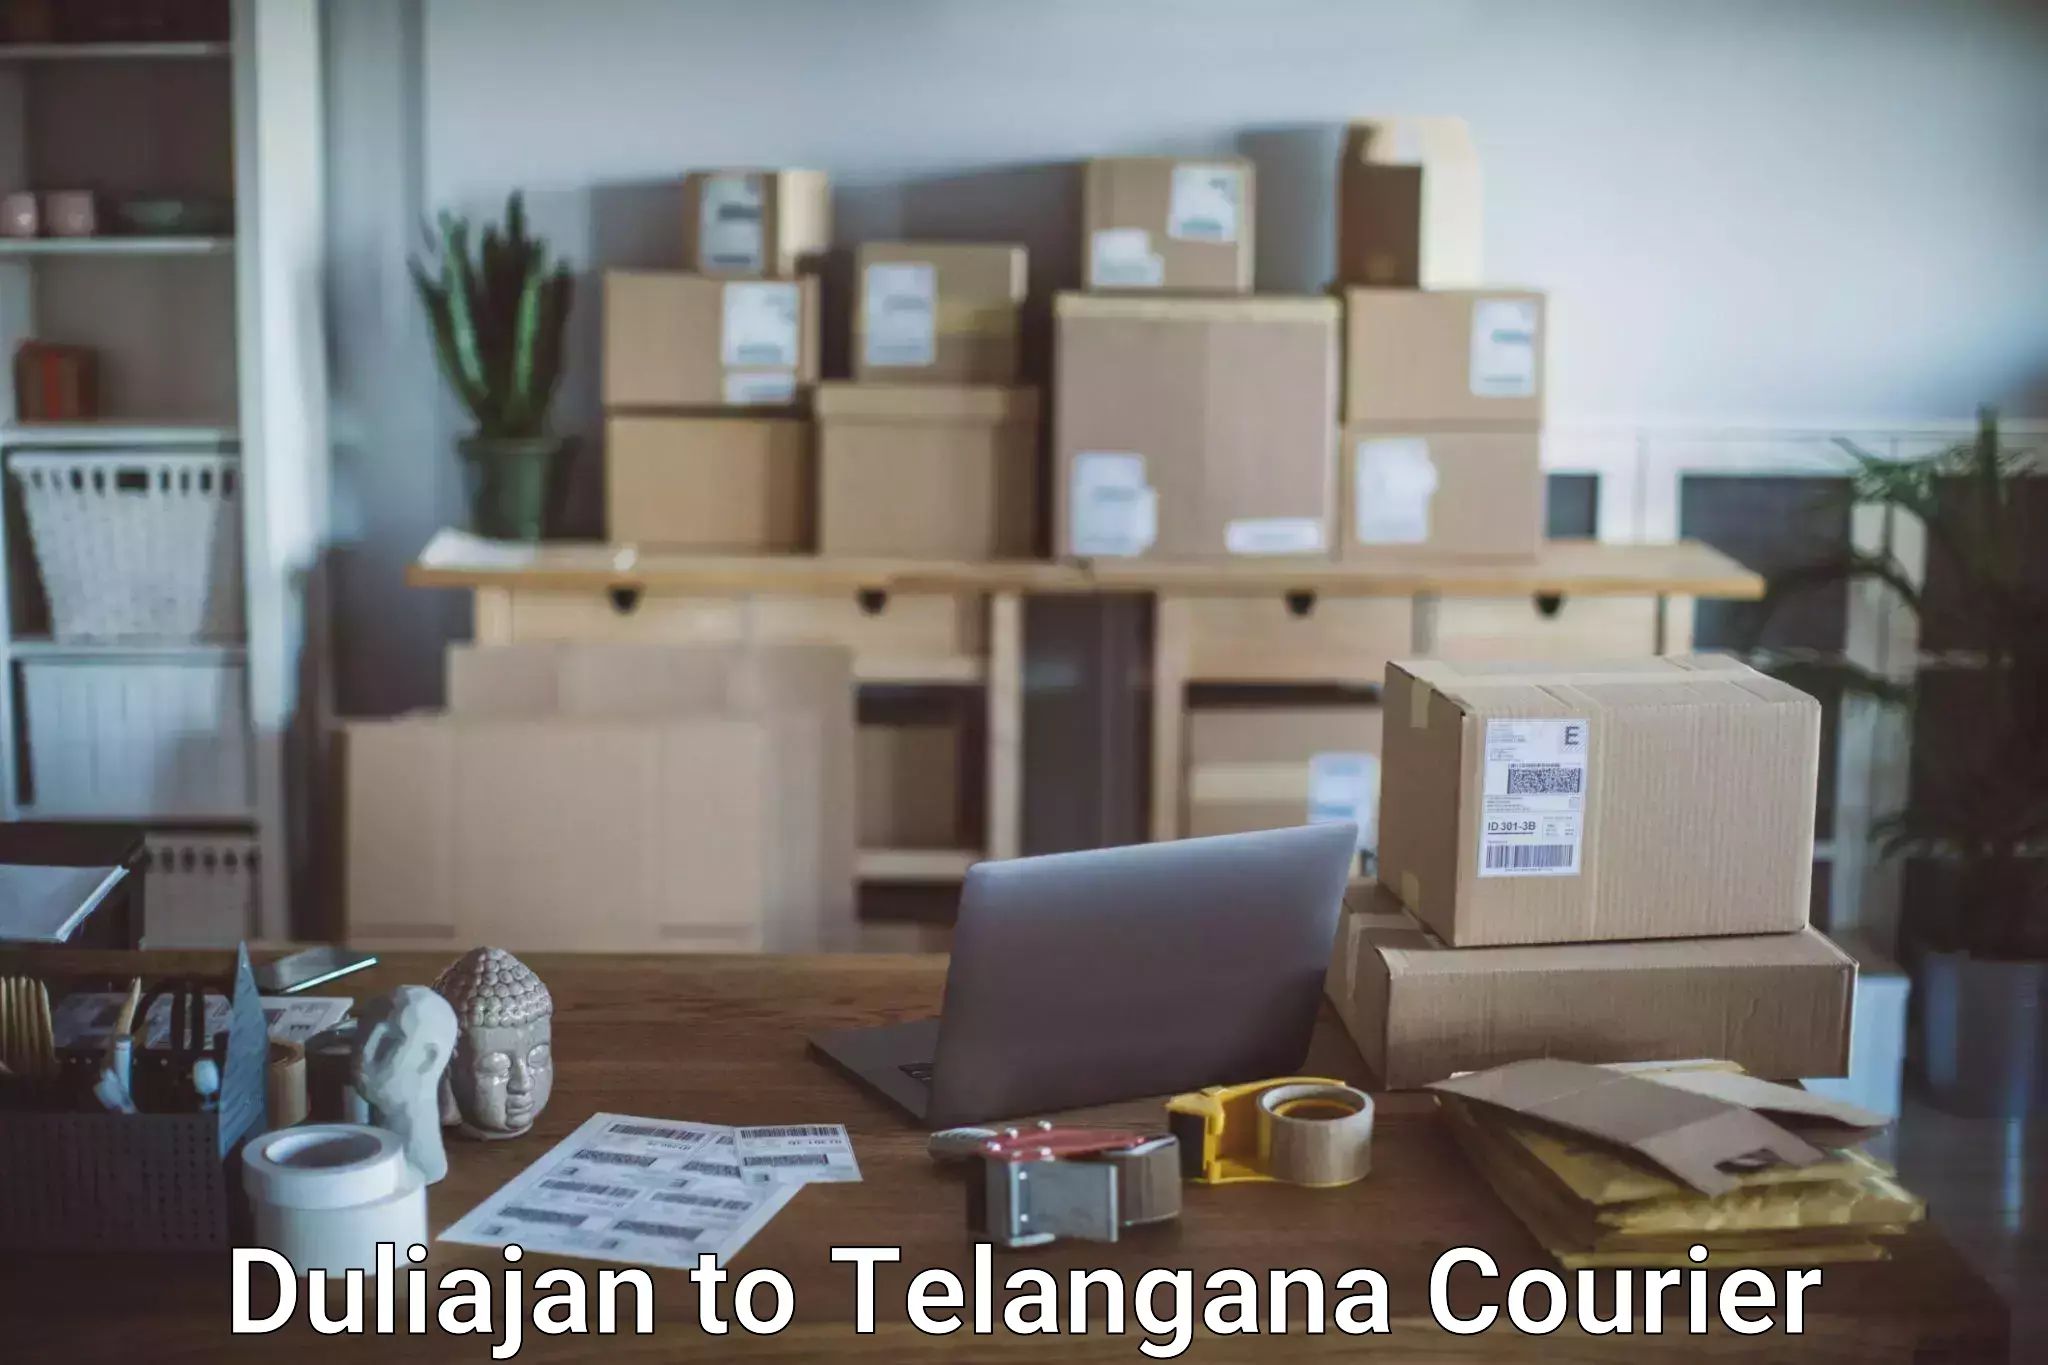 Luggage delivery app Duliajan to Bhupalpally